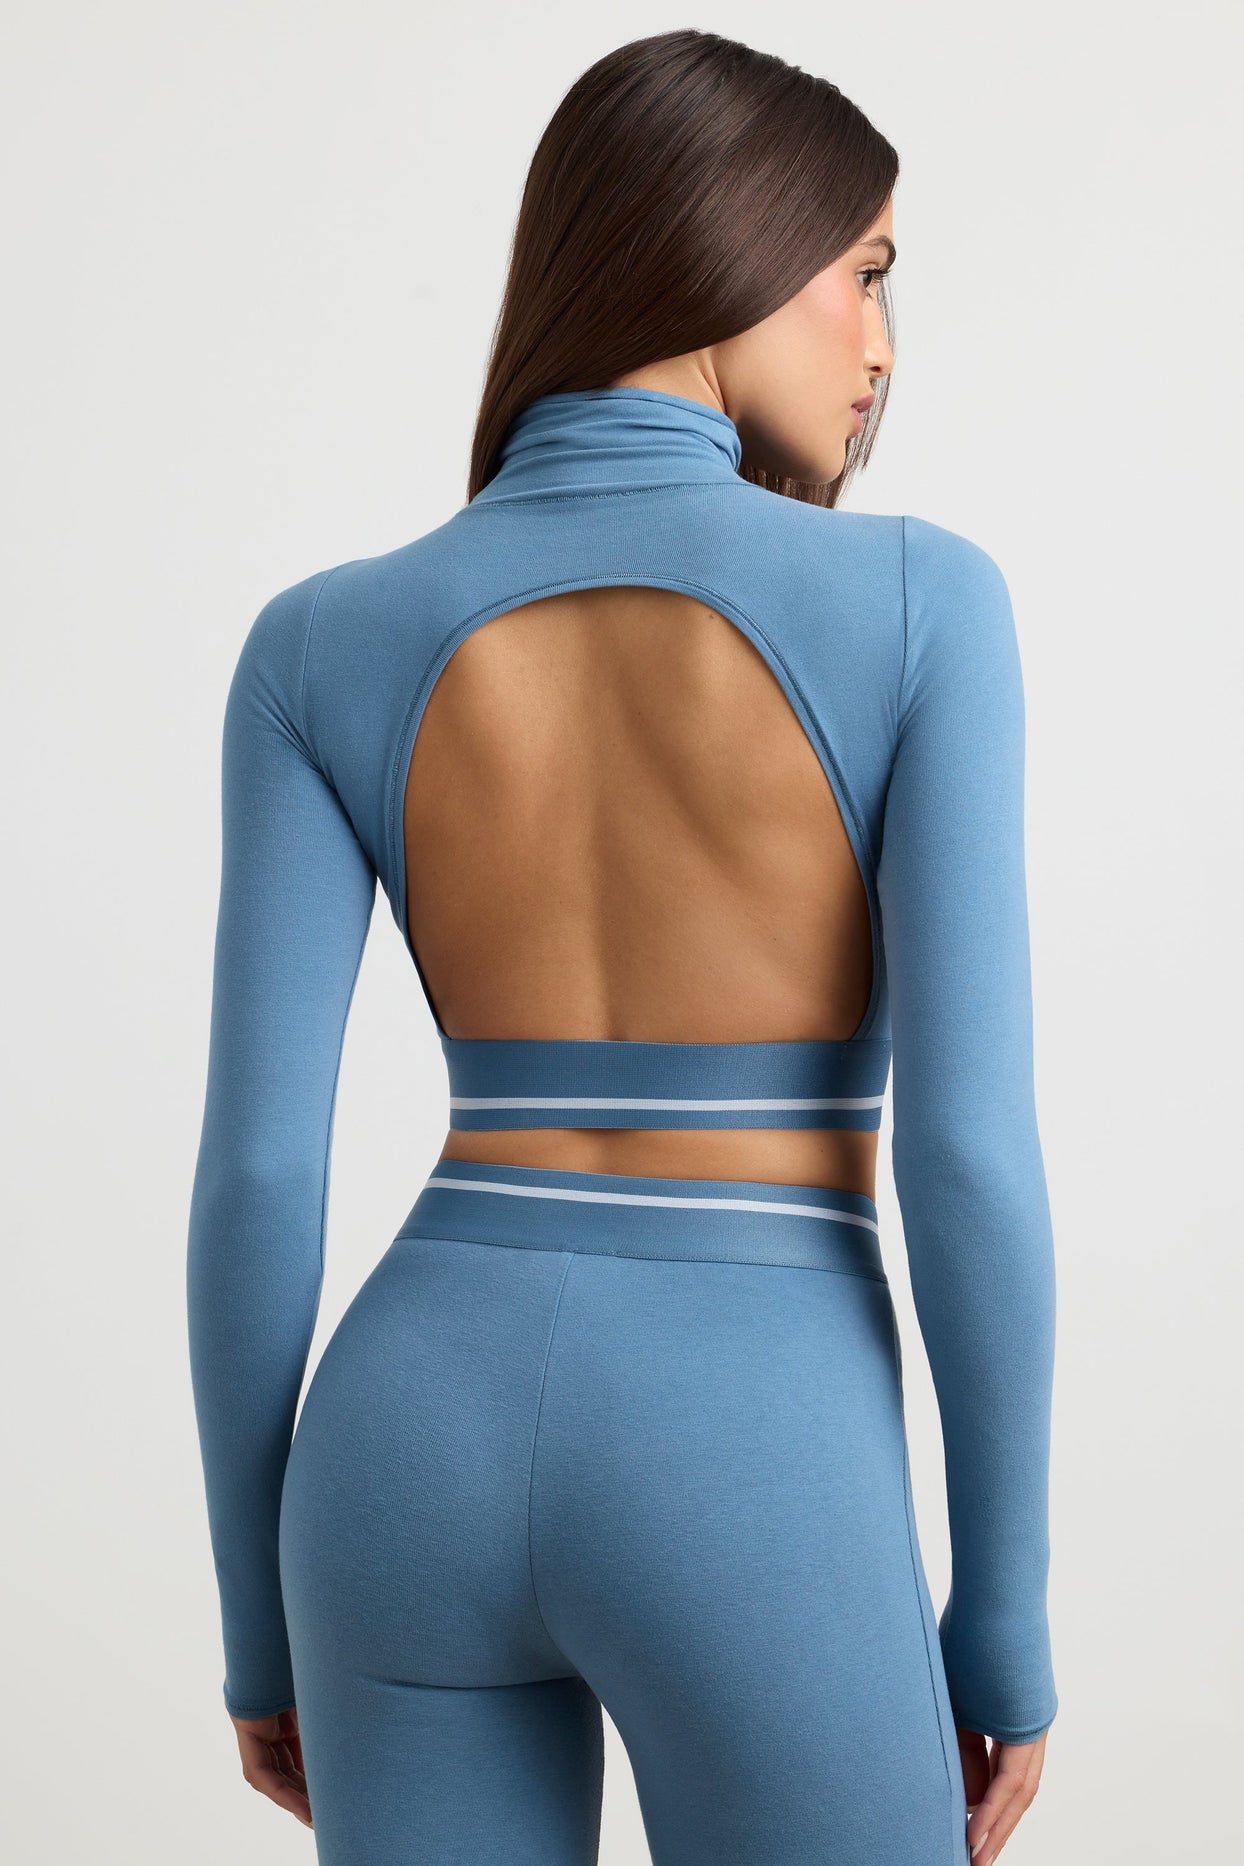 Blue Long Sleeve Top - Backless Crop Top - Women's Top